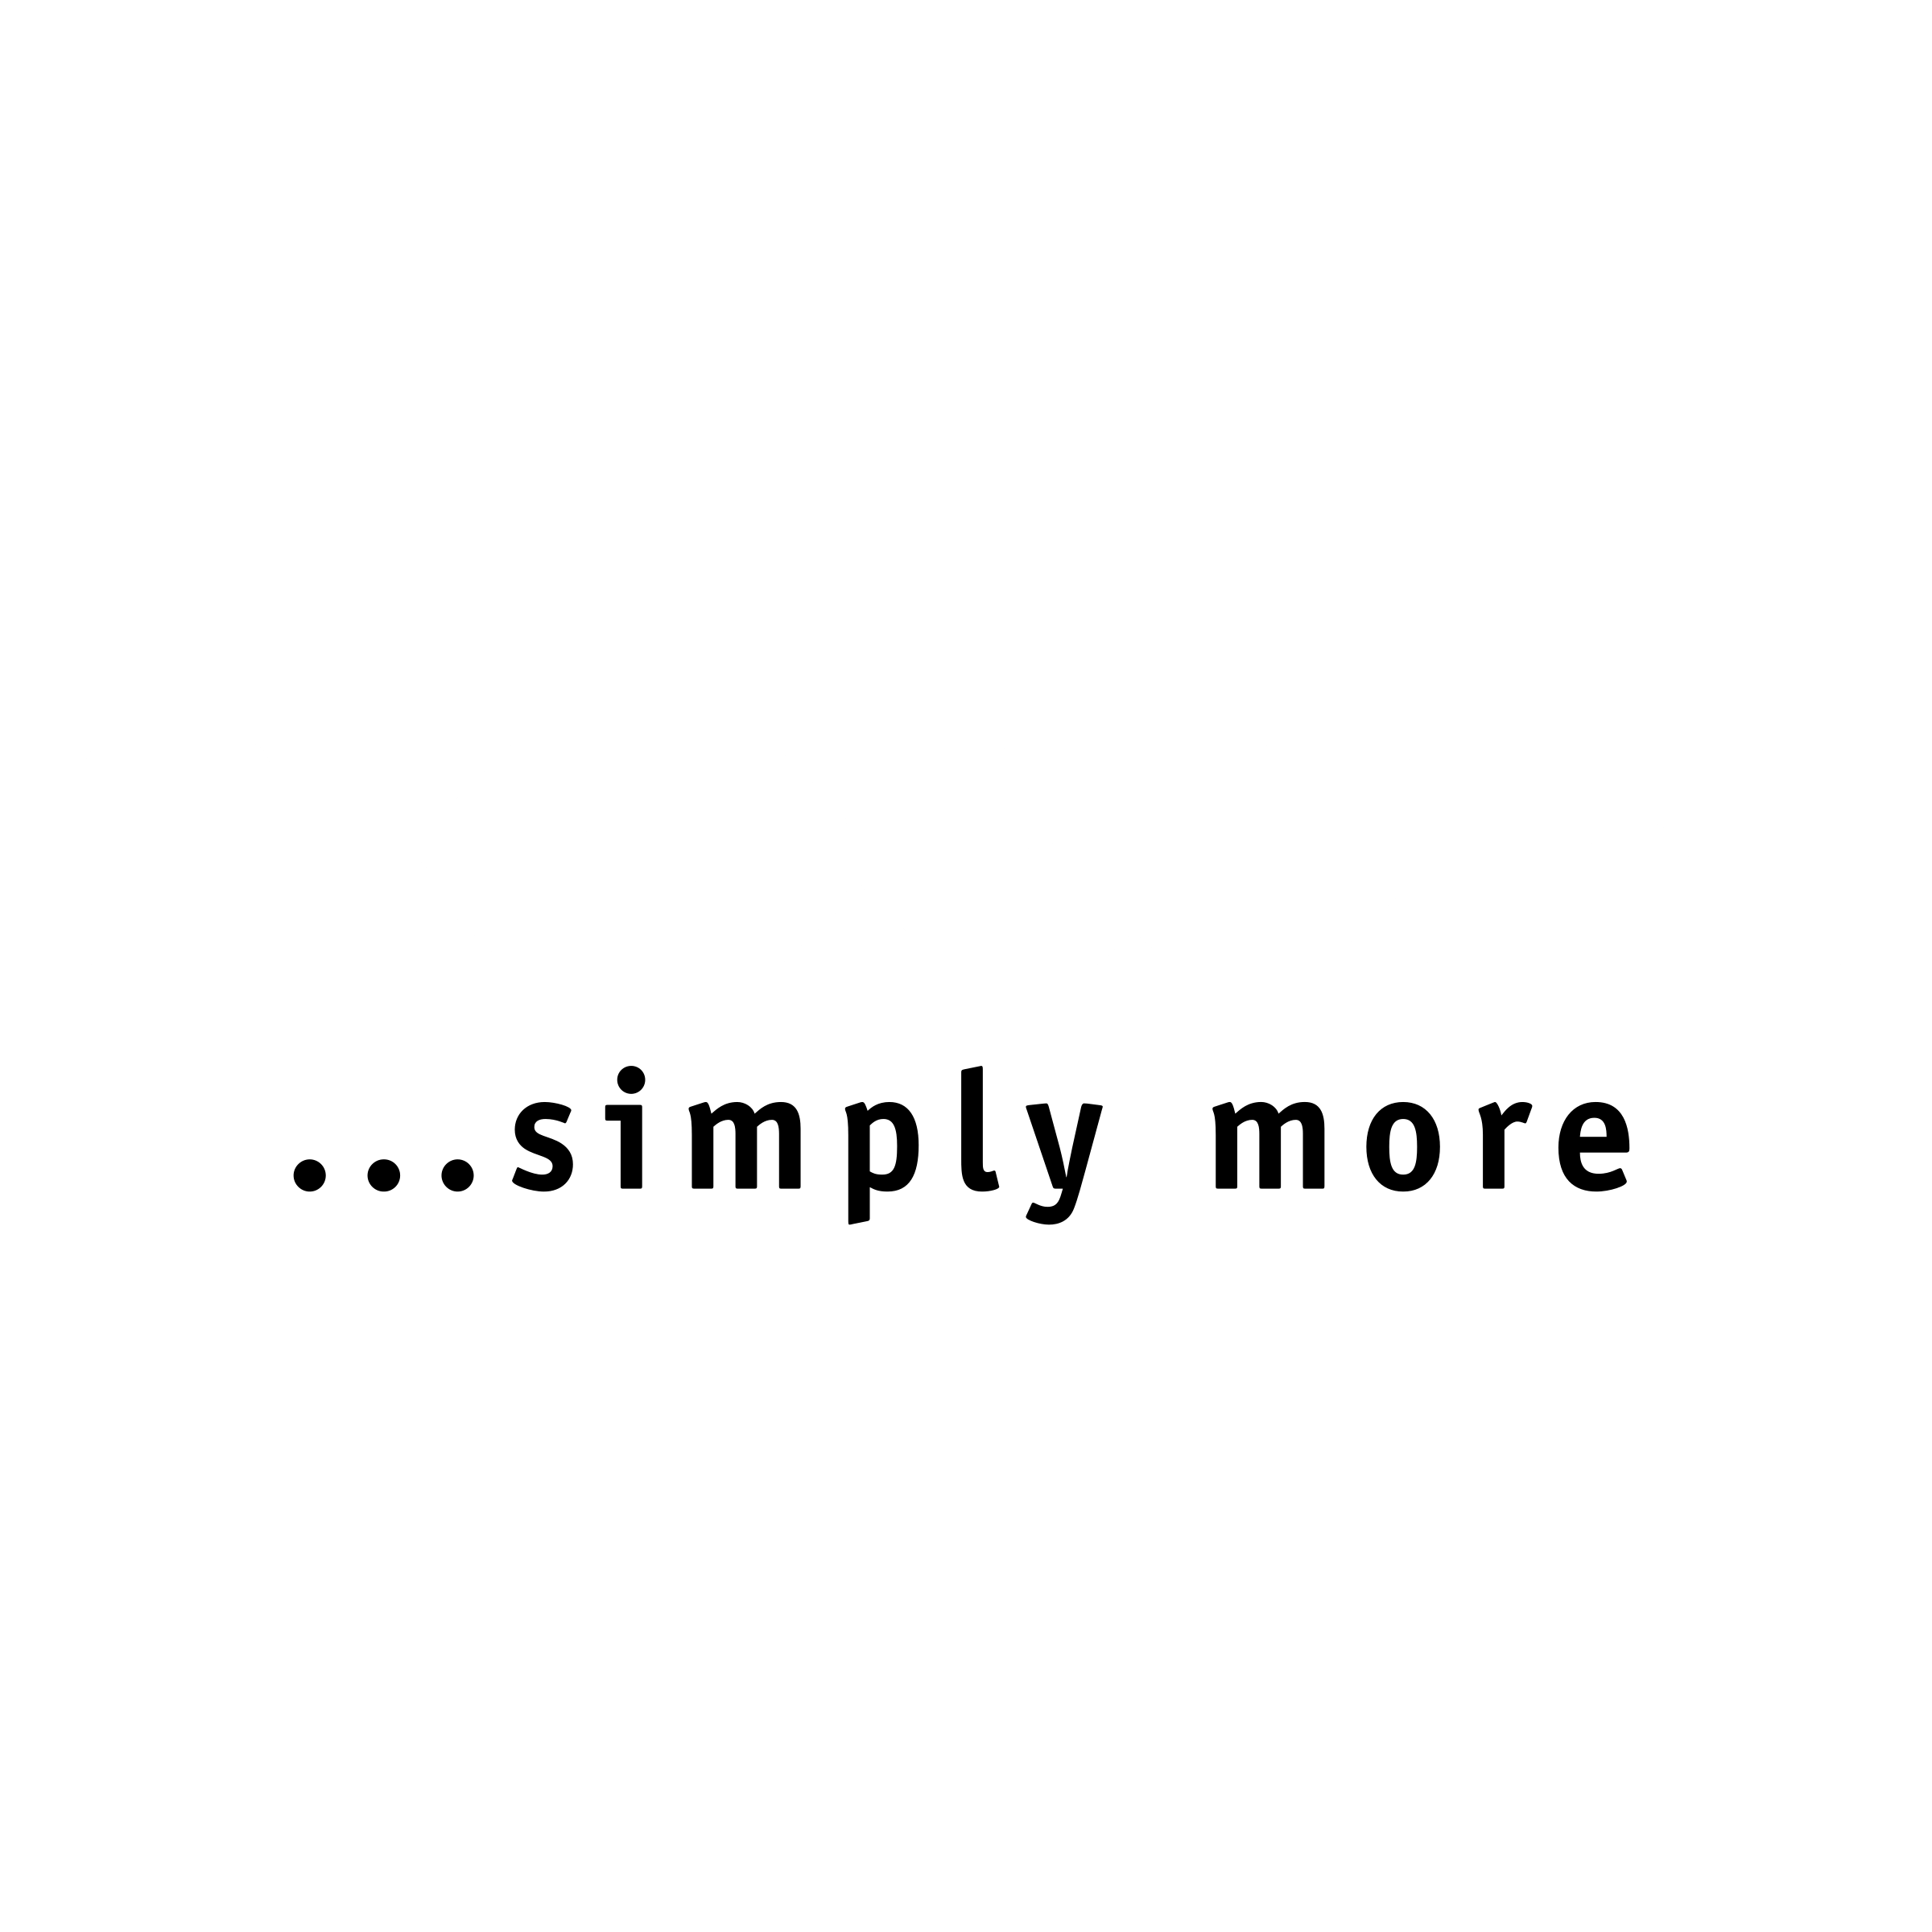 Lowa Logo - Lowa Logo PNG Transparent & SVG Vector